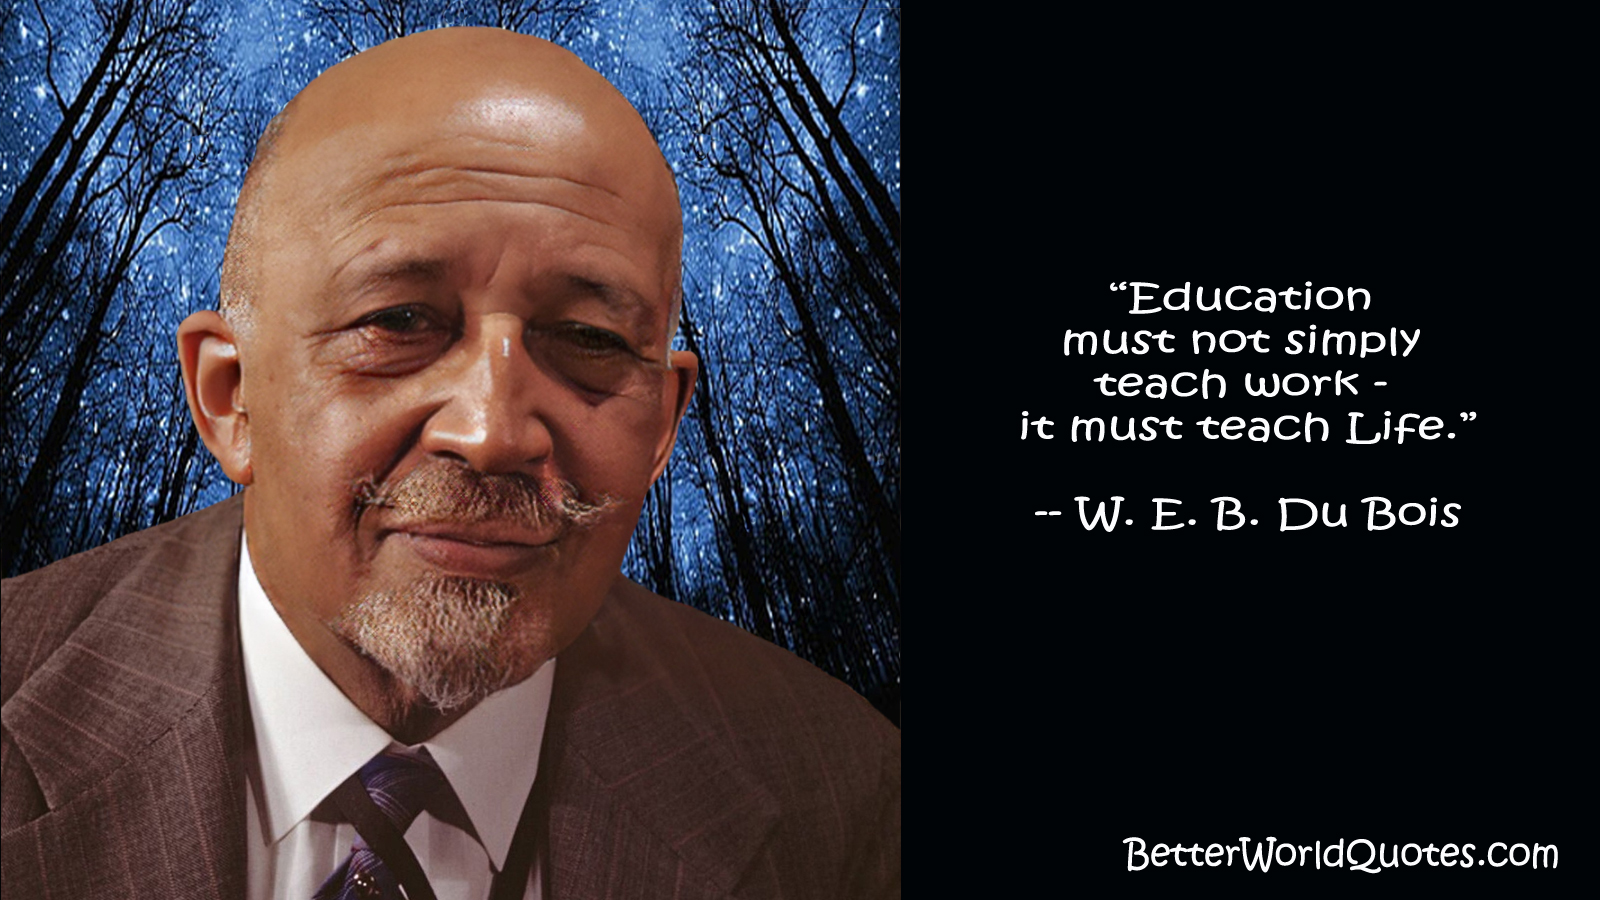 W. E. B. Du Bois: Education must not simply teach work - it must teach Life.